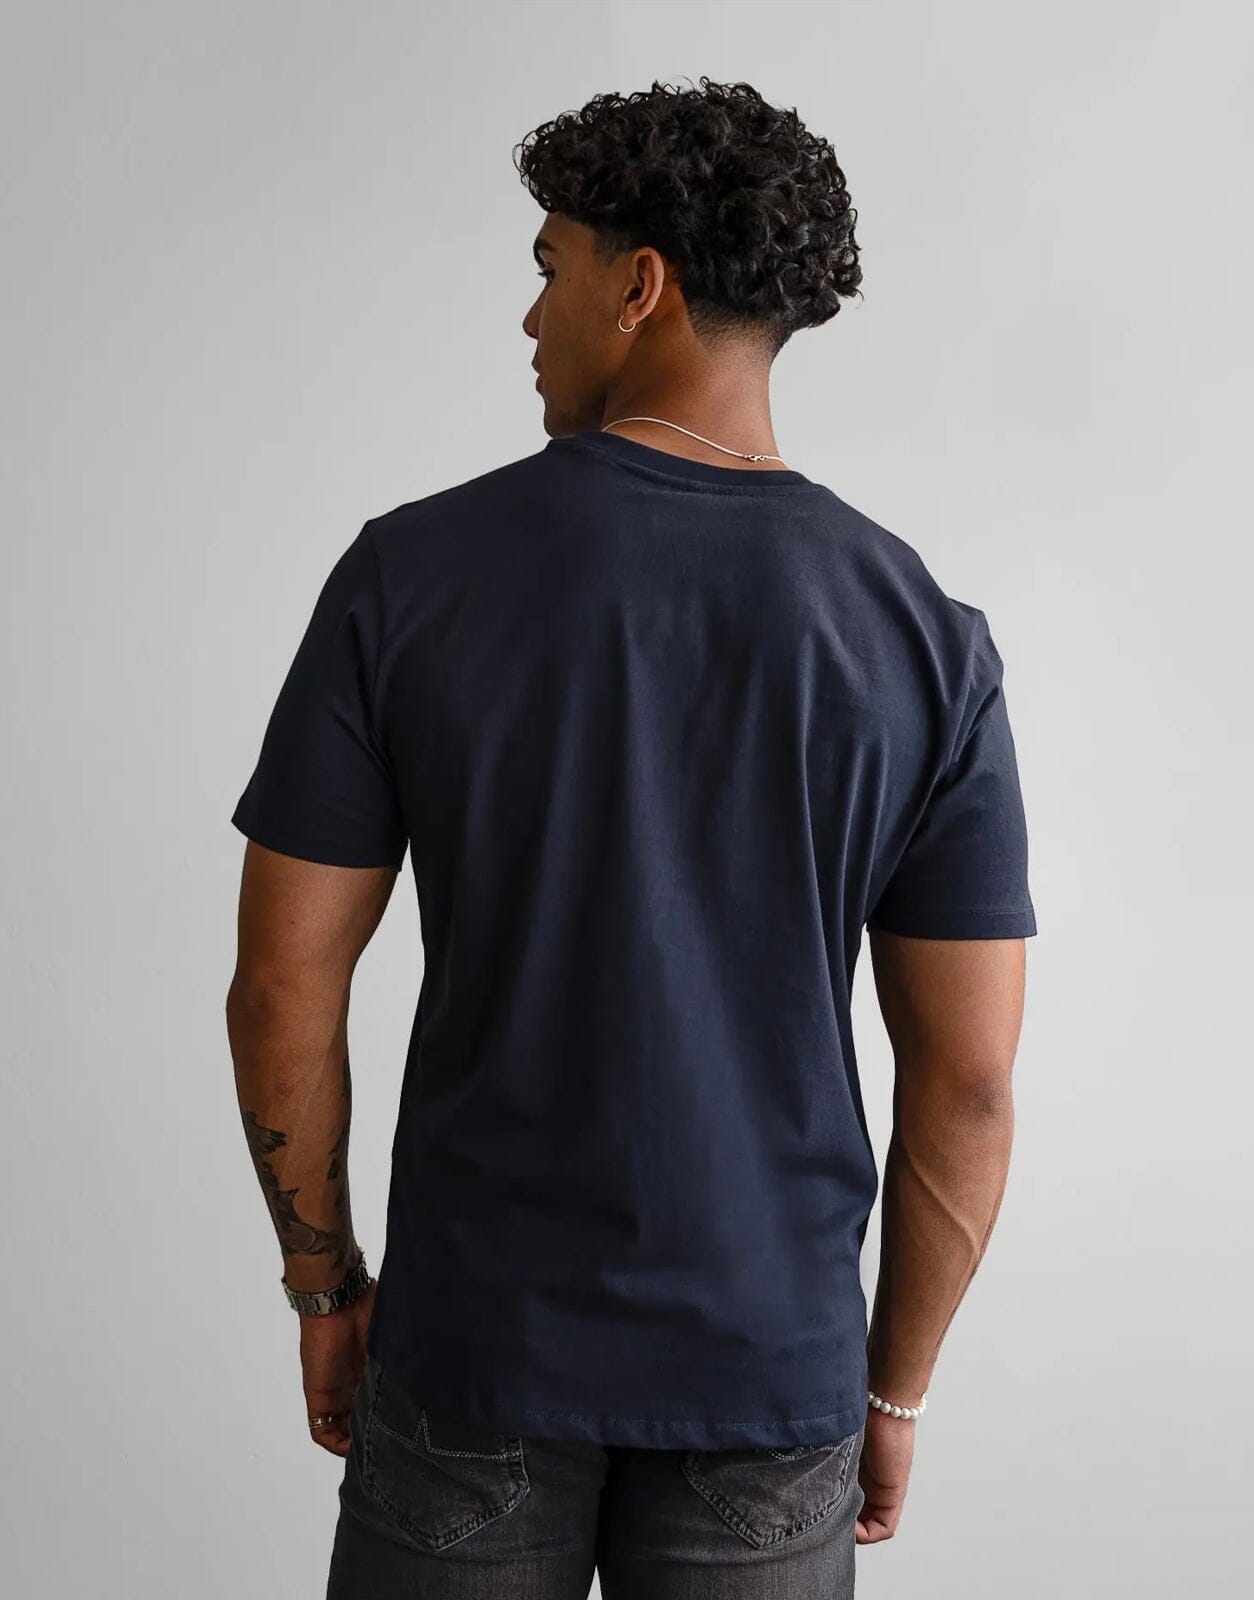 Fade Essential Navy T-Shirt - Subwear